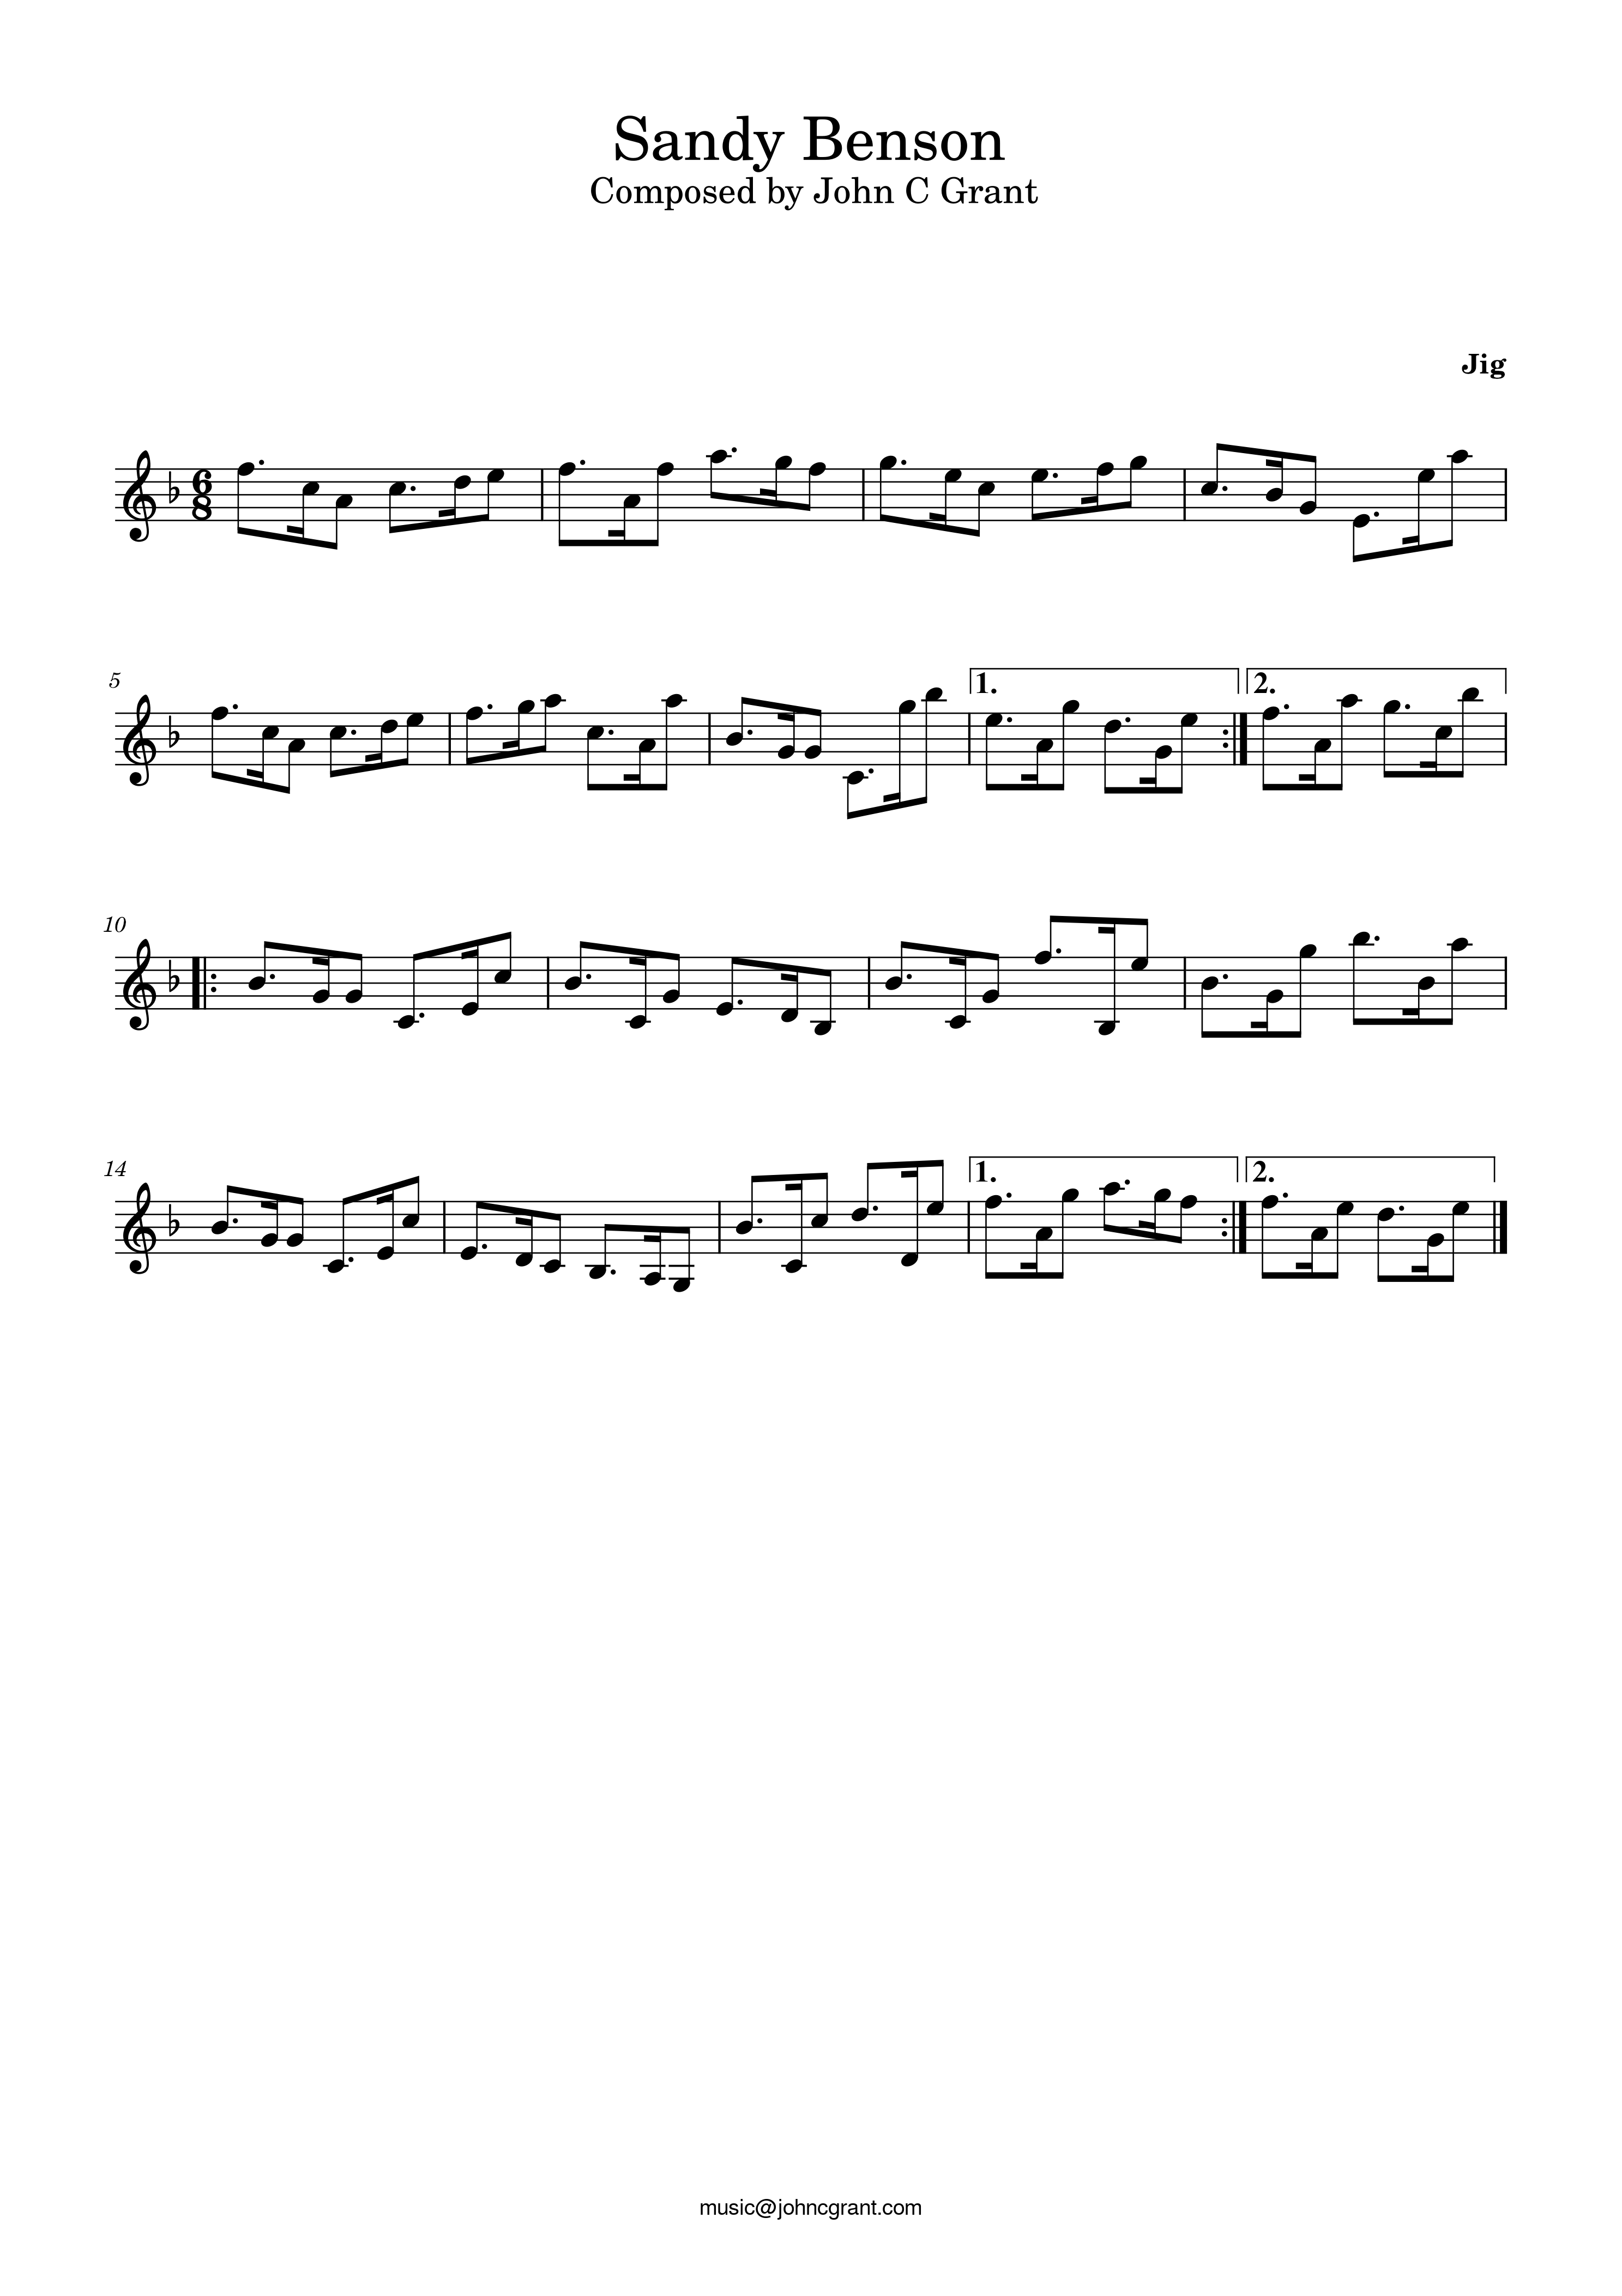 Sandy Benson - Composed by John C Grant (https://johncgrant.com). Traditional composer from Kilmarnock, Ayrshire, Scotland.